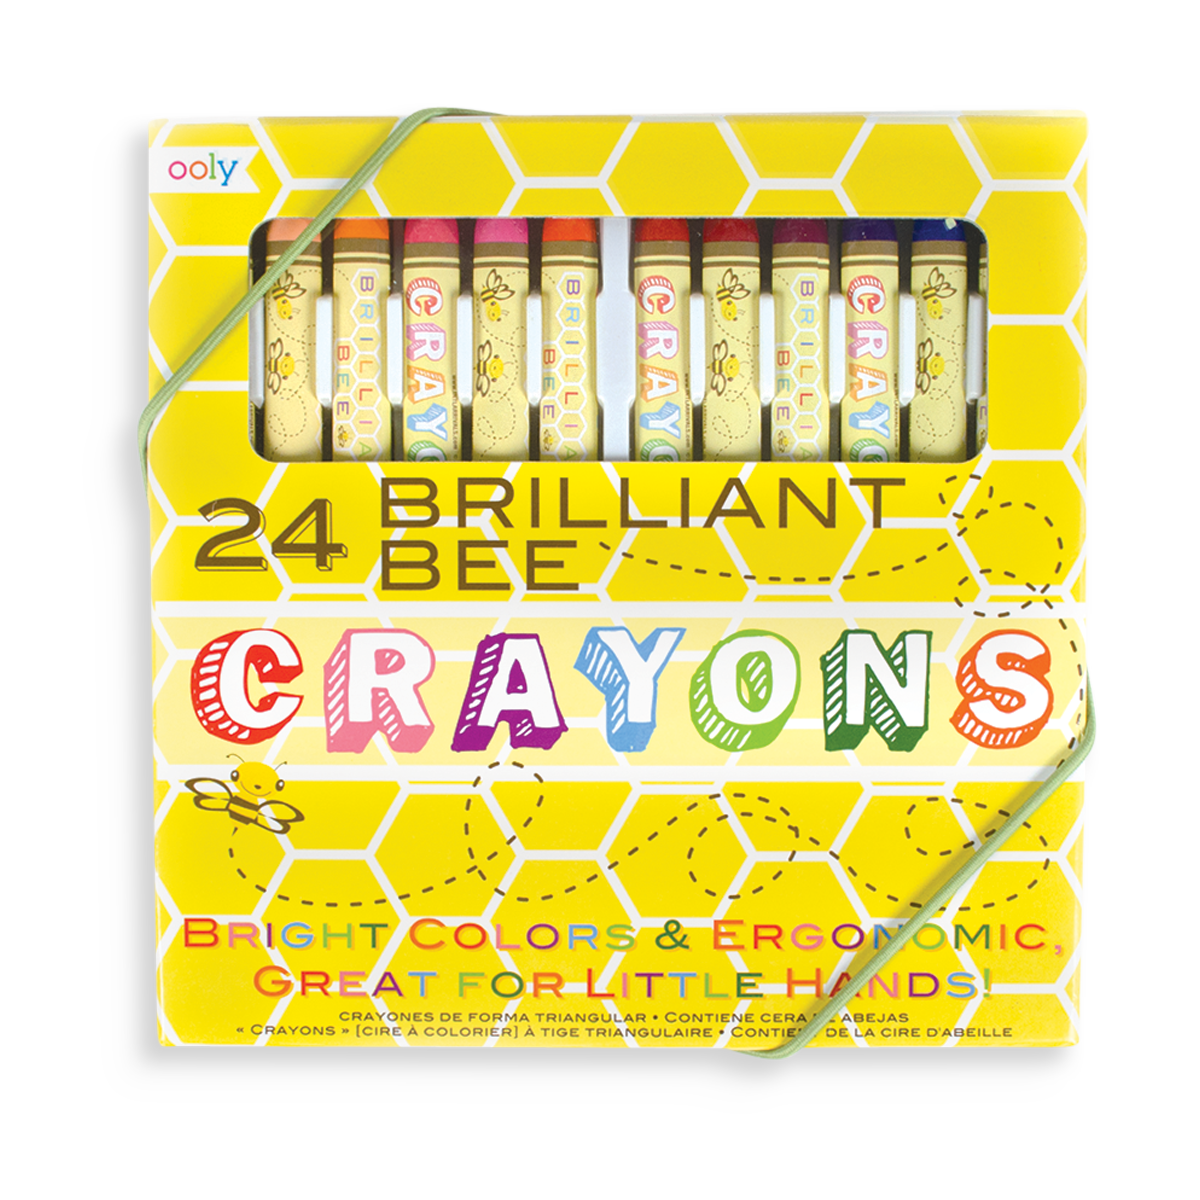 Brilliant Bee Crayons by OOLY - HoneyBug 